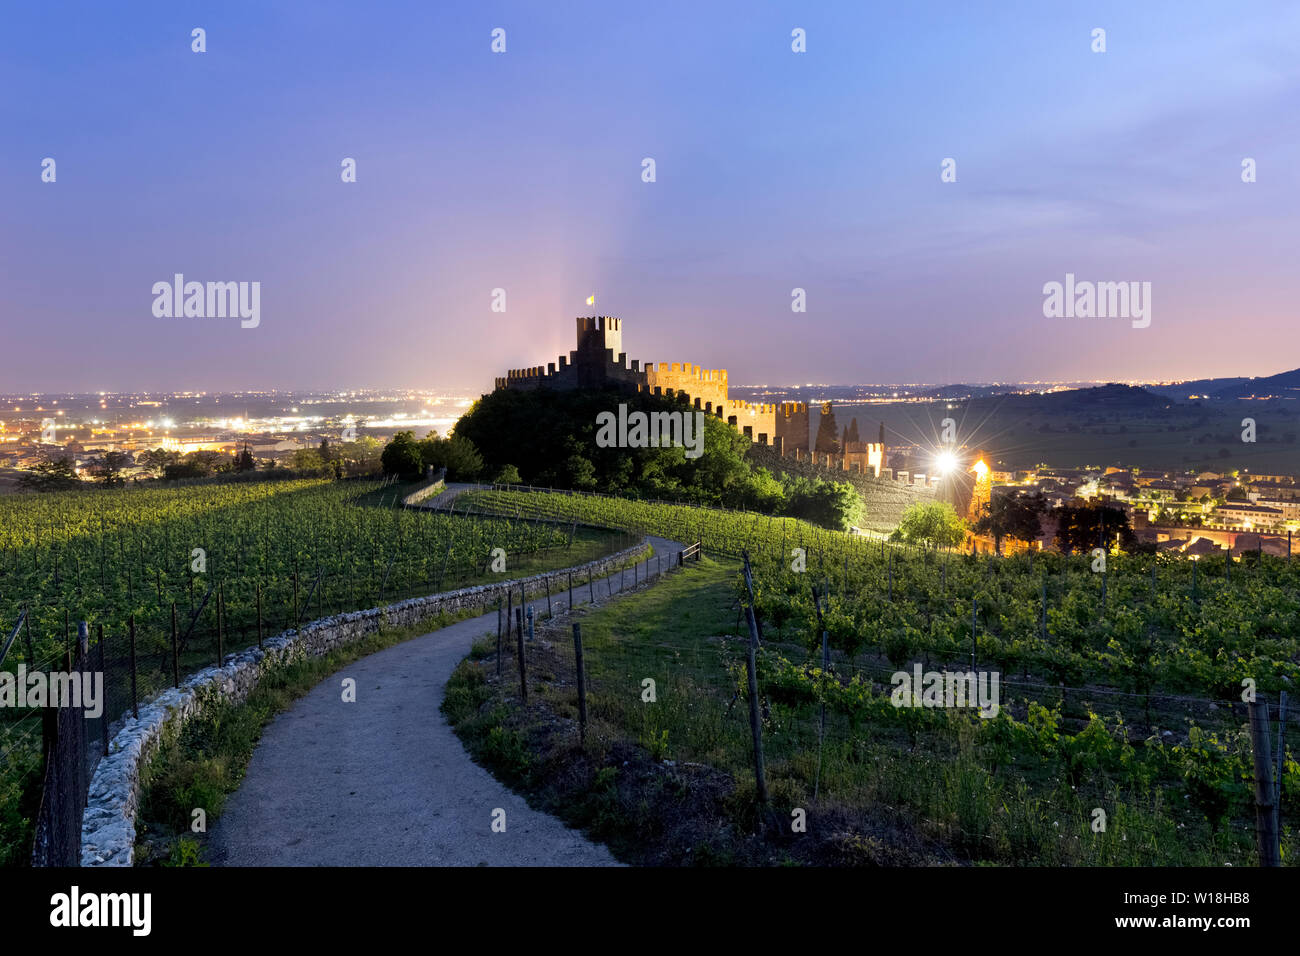 The Scaligero castle and the road among the Soave wine vineyards. Soave, Verona province, Veneto, Italy, Europe. Stock Photo